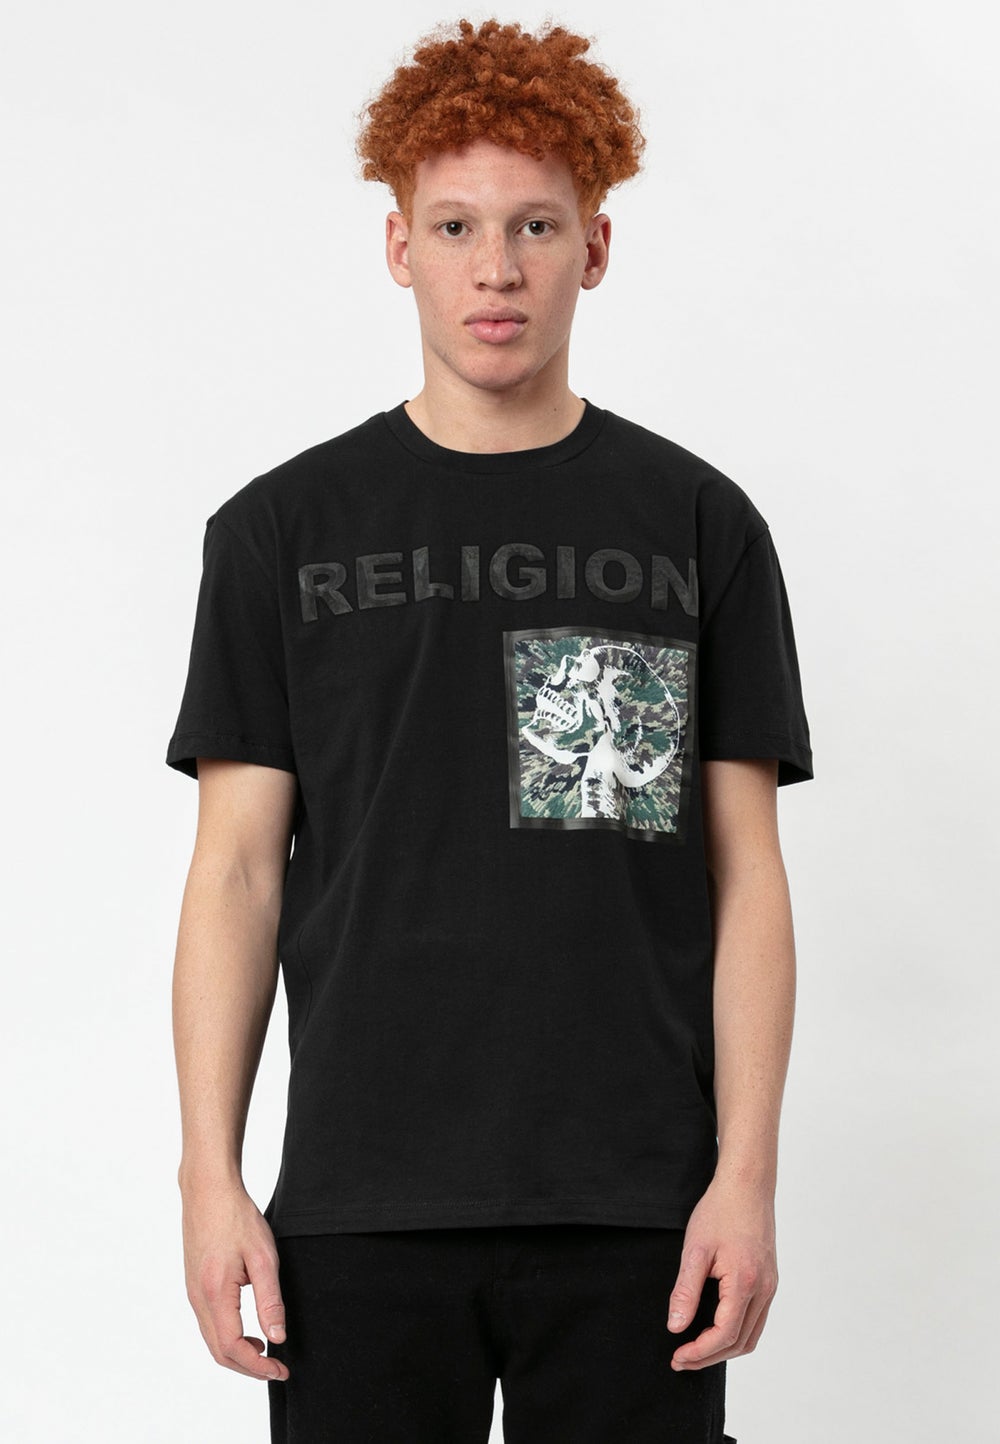 Religion - Siege Tee - Black